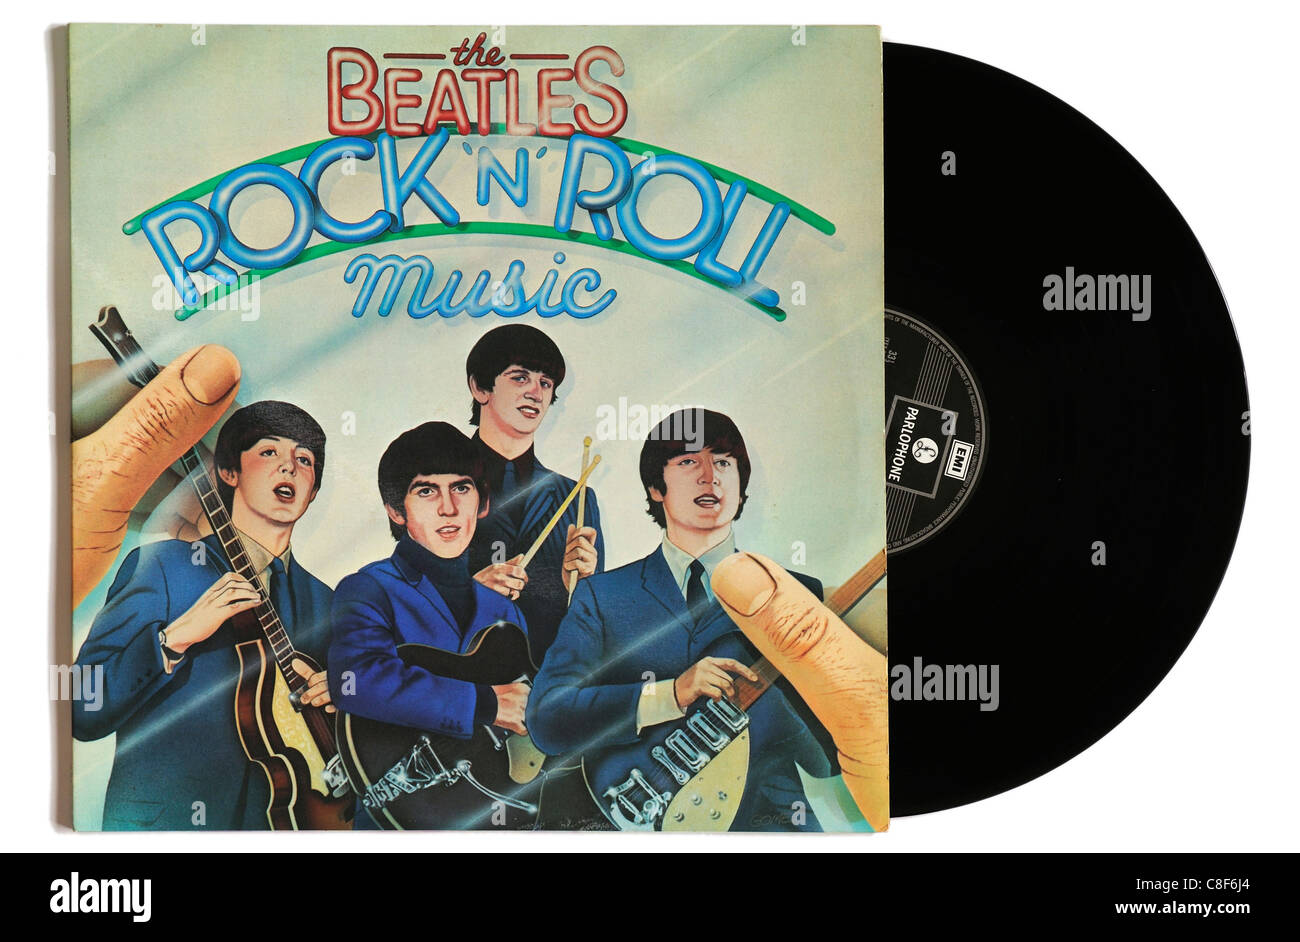 The Beatles Rock 'n' Roll Music album Stock Photo - Alamy